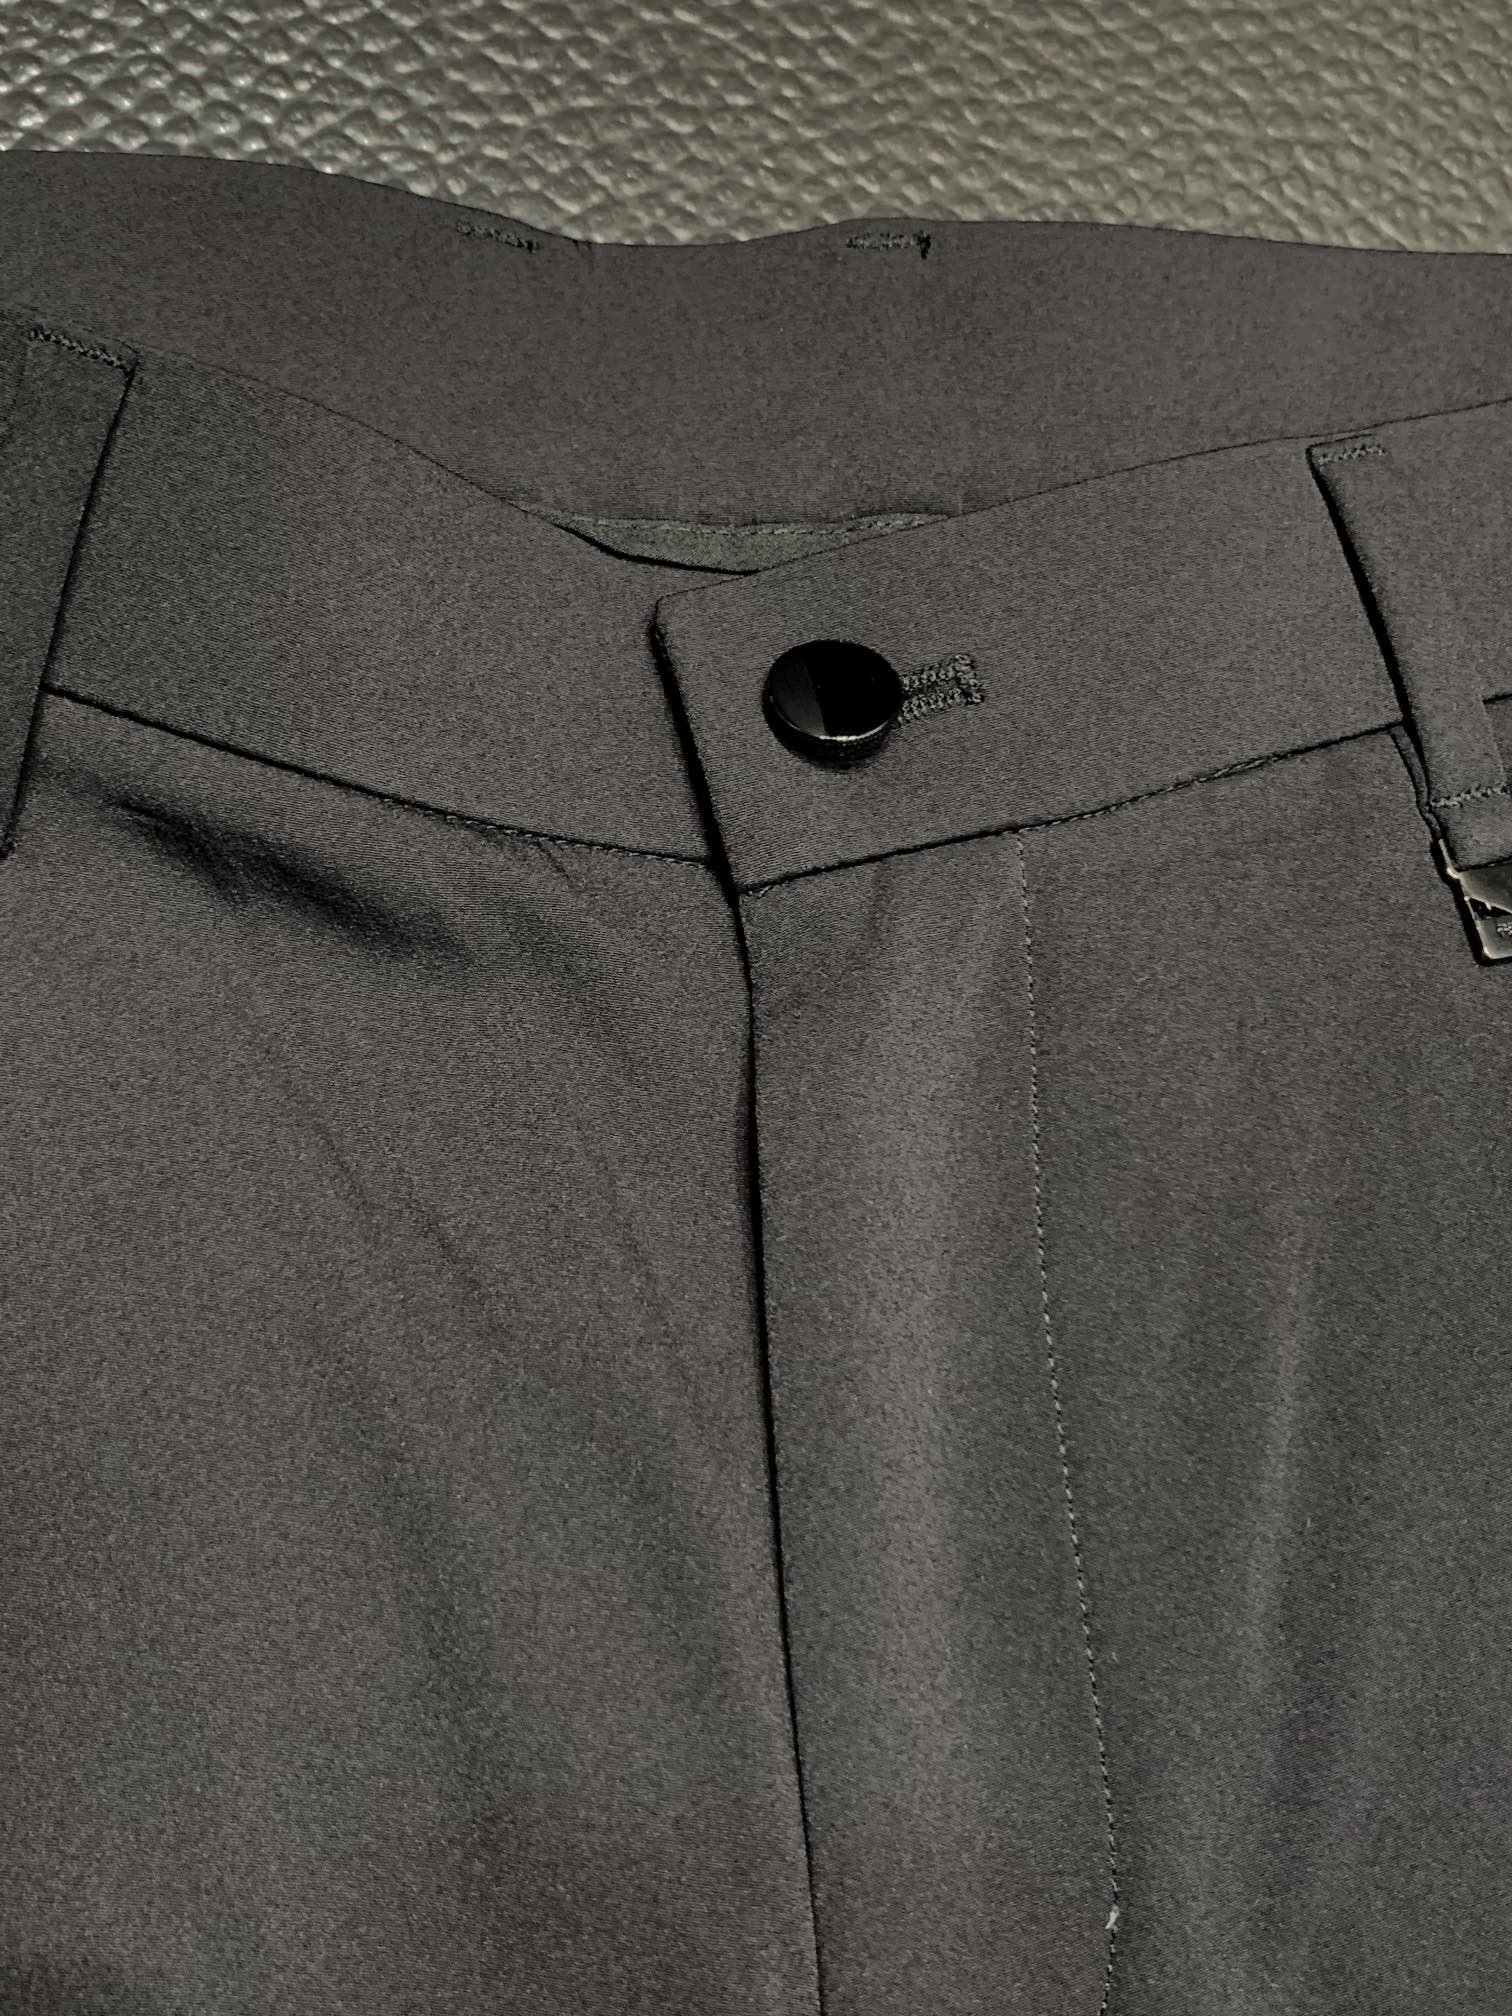 FENDI芬迪独家专供新款休闲西裤高端版本！专柜定制面料透气舒适度高细节无可挑剔品牌元素设计理念体现高品